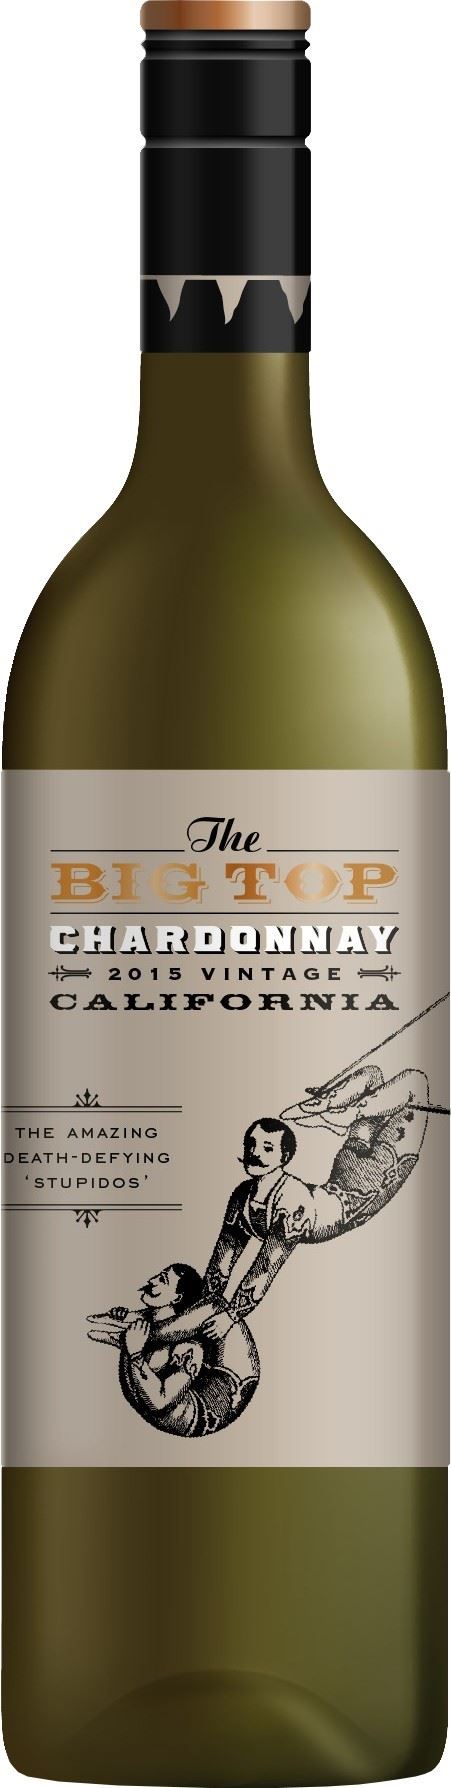 The Big Top Chardonnay